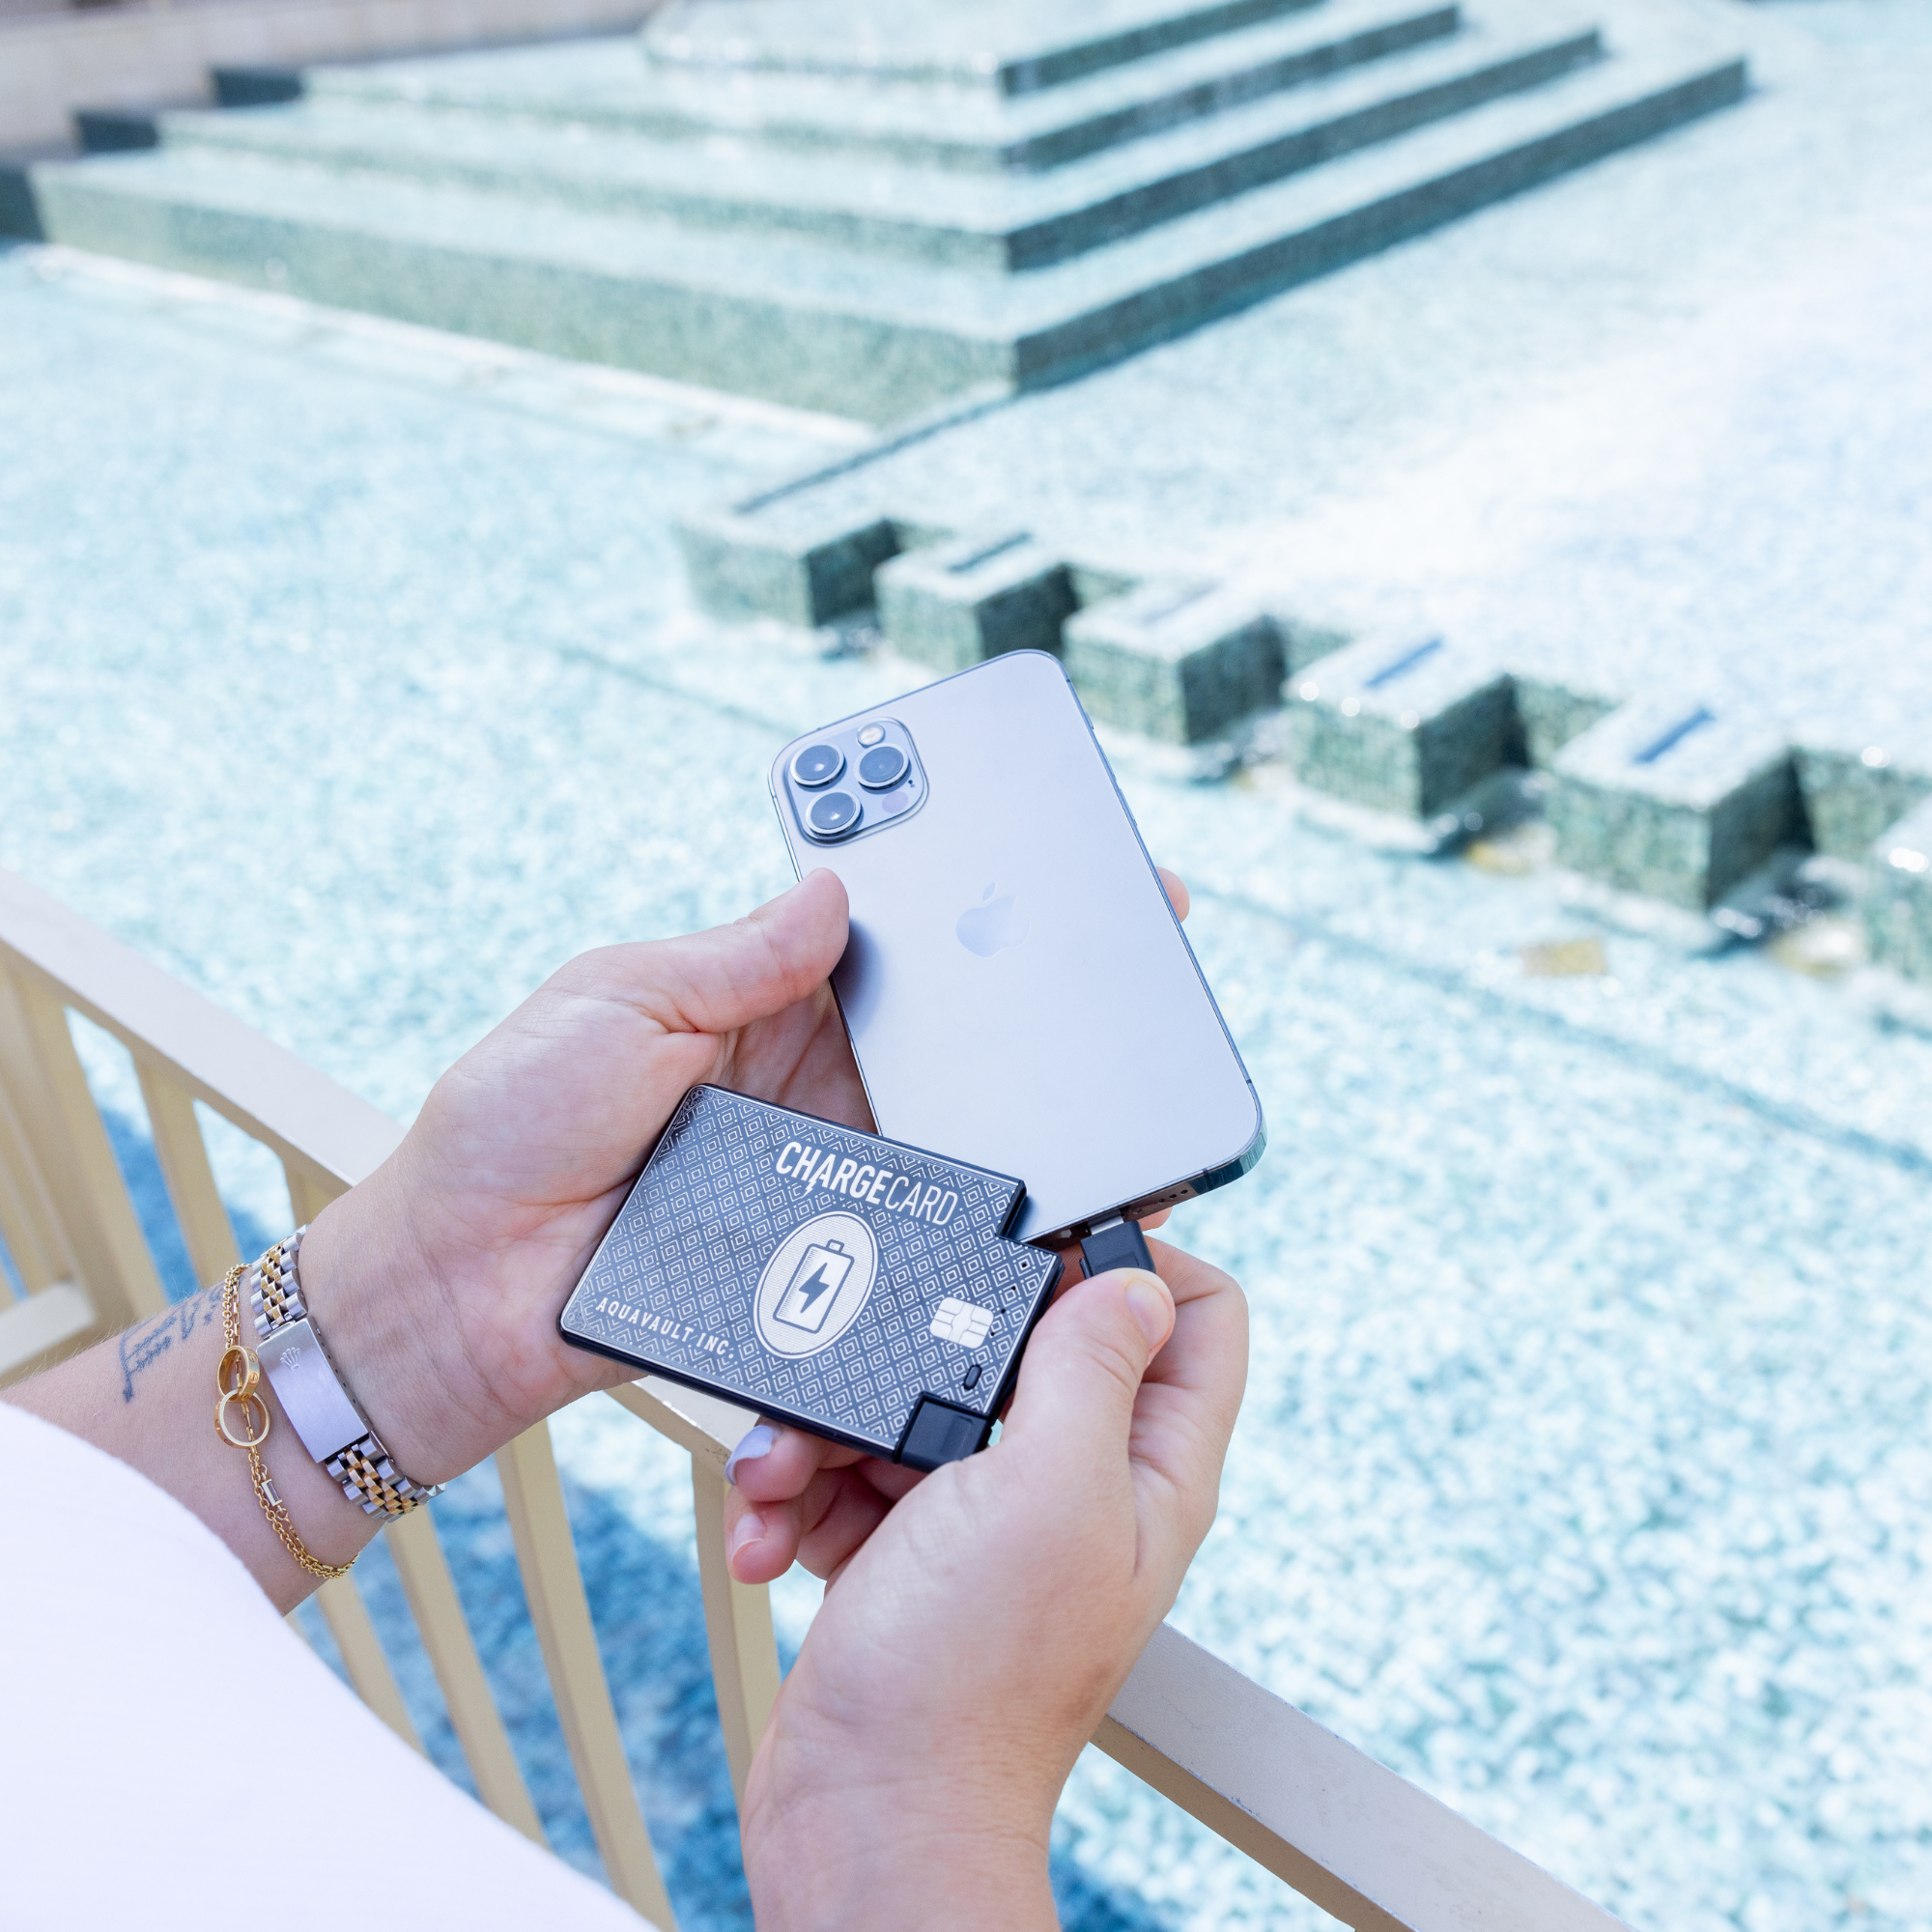 AquaVault ChargeCard Portable Phone Charger & Power Bahrain